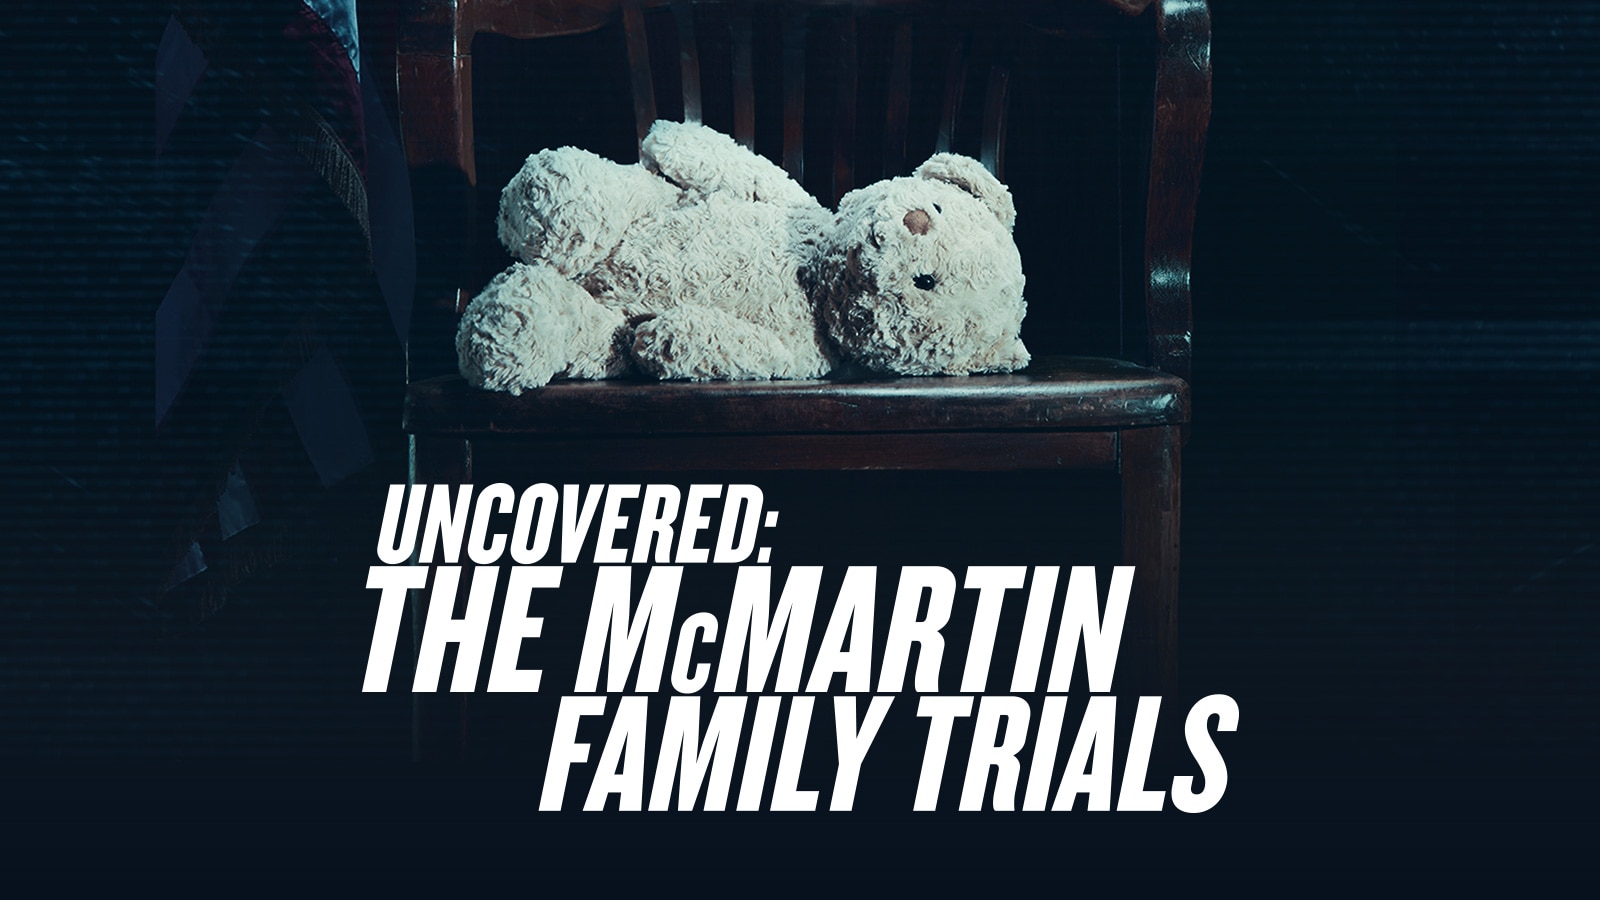 McMartin Family Trials